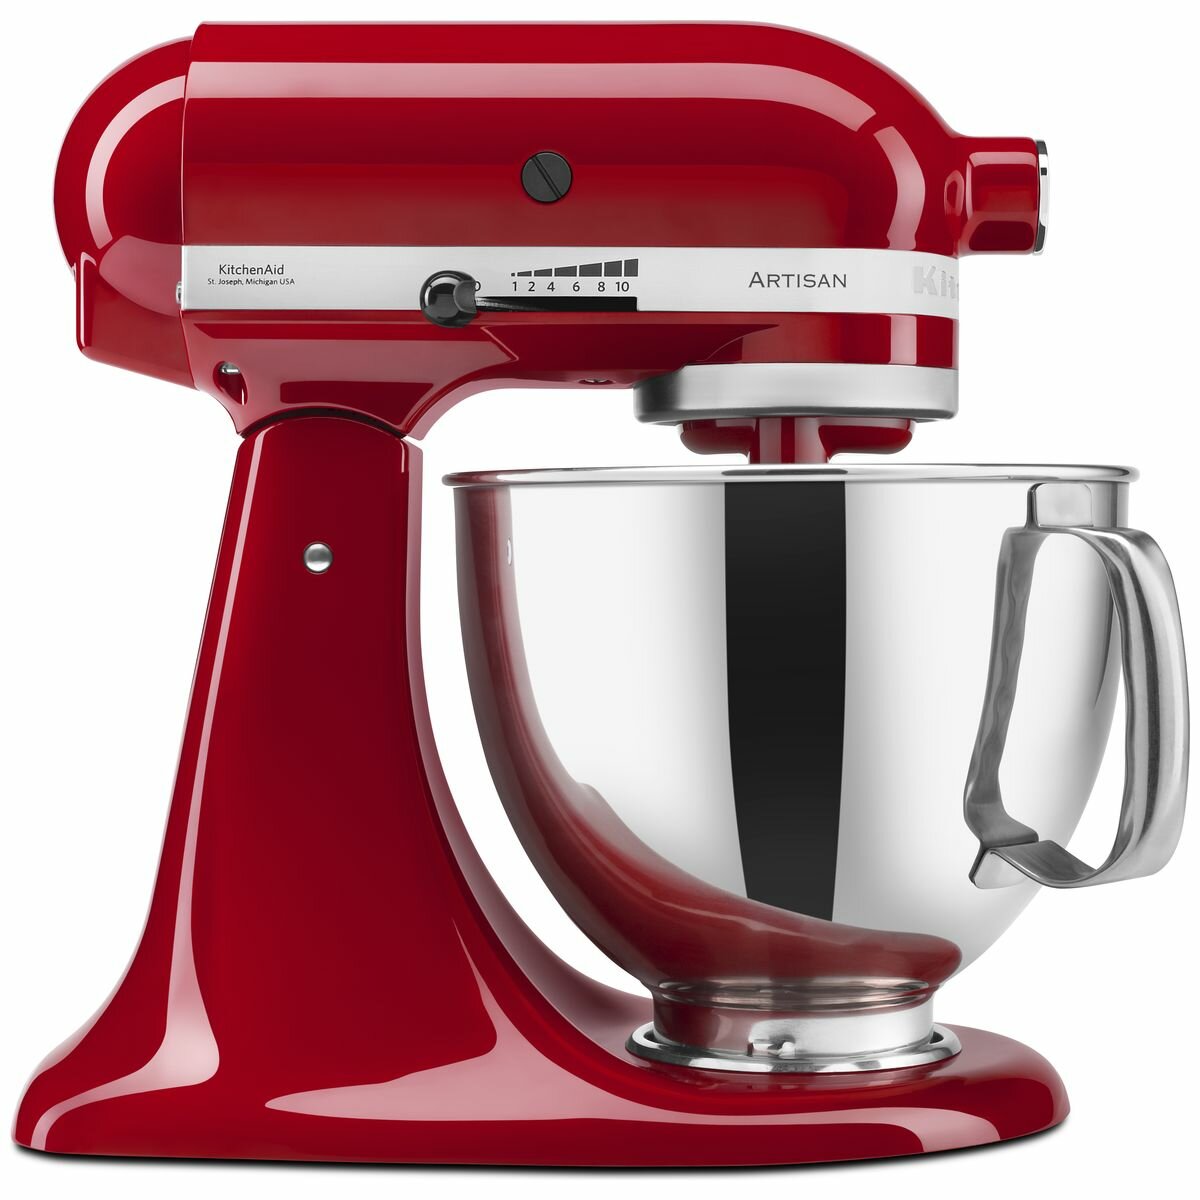 Kitchenaid 5ksm150psaer Artisan Stand Mixer Empire Red Appliances Online